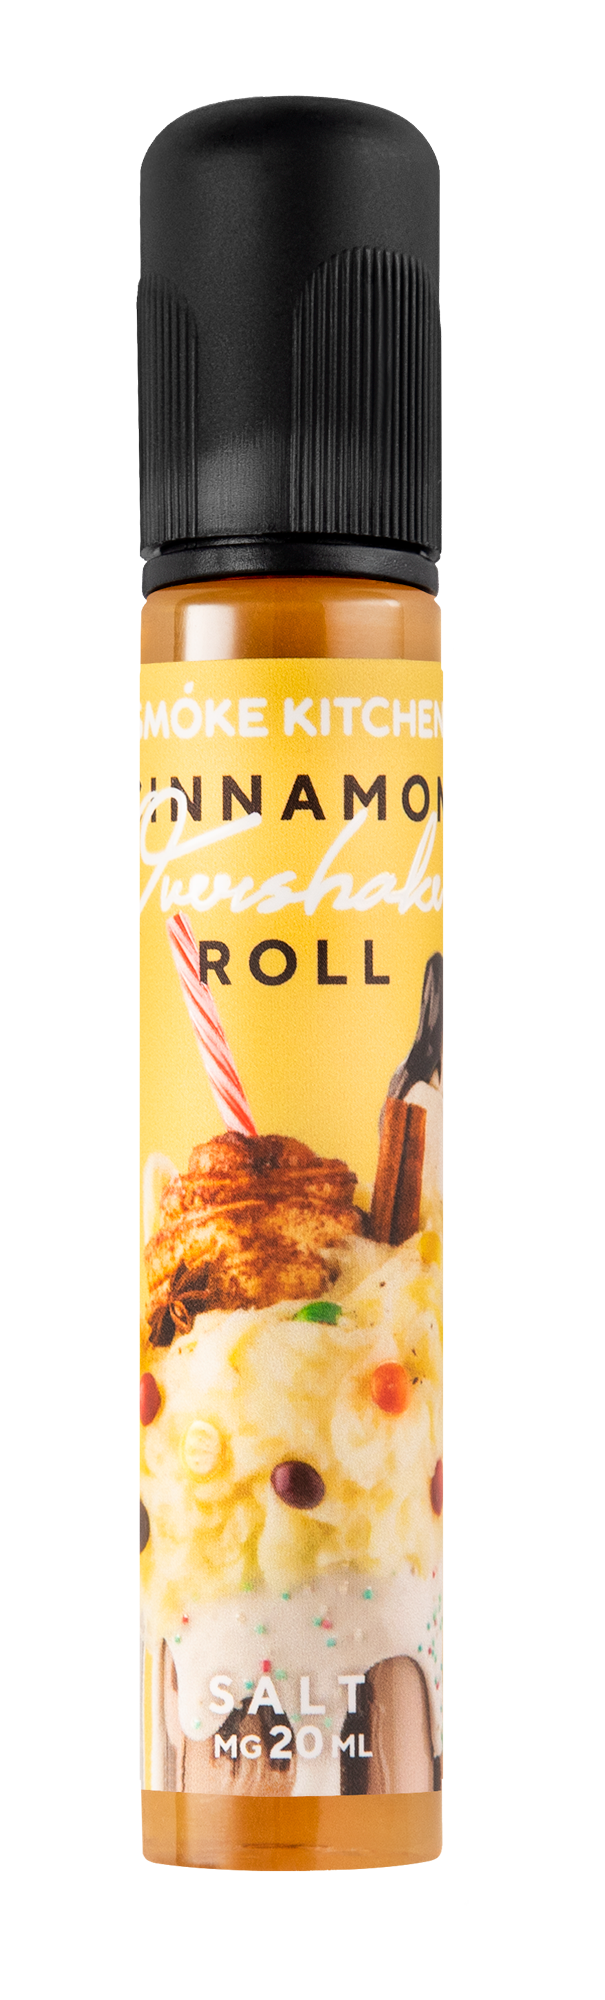 Cinnamon Roll (Булочка с корицей) / Overshake Salt / Smoke Kitchen & The Milkman